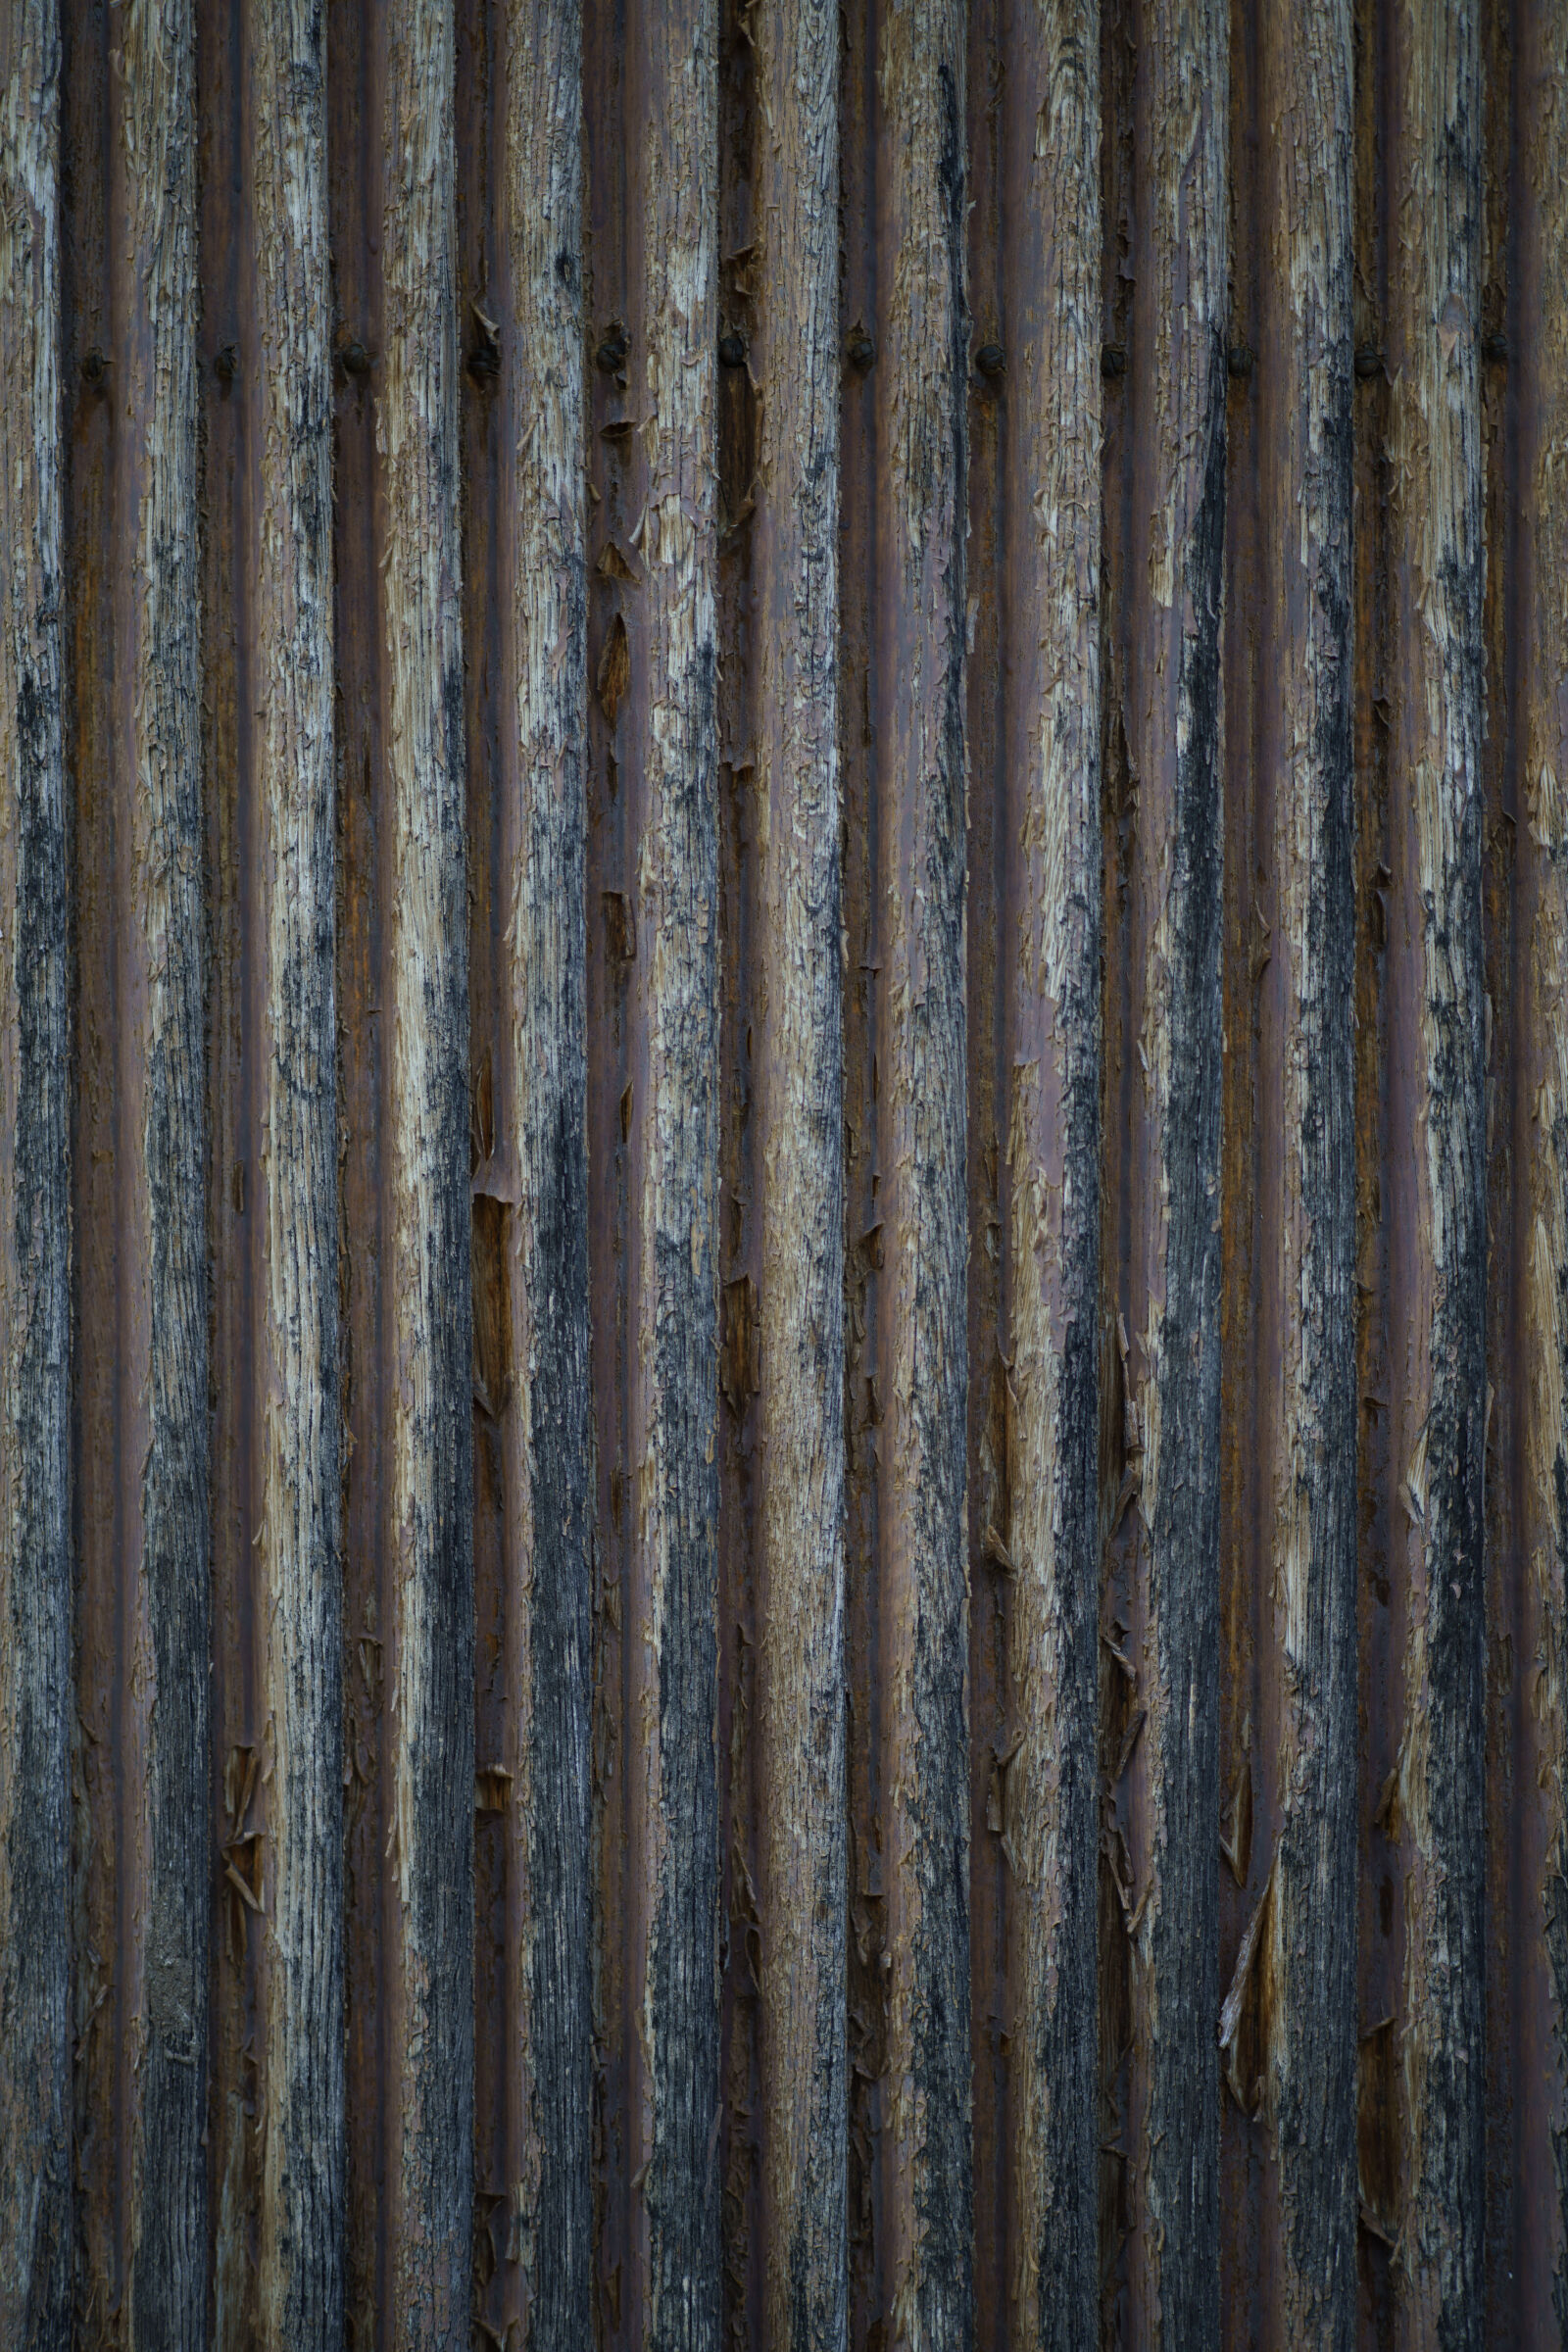 Samyang AF 85mm F1.4 II sample photo. Wornout wooden surface photography